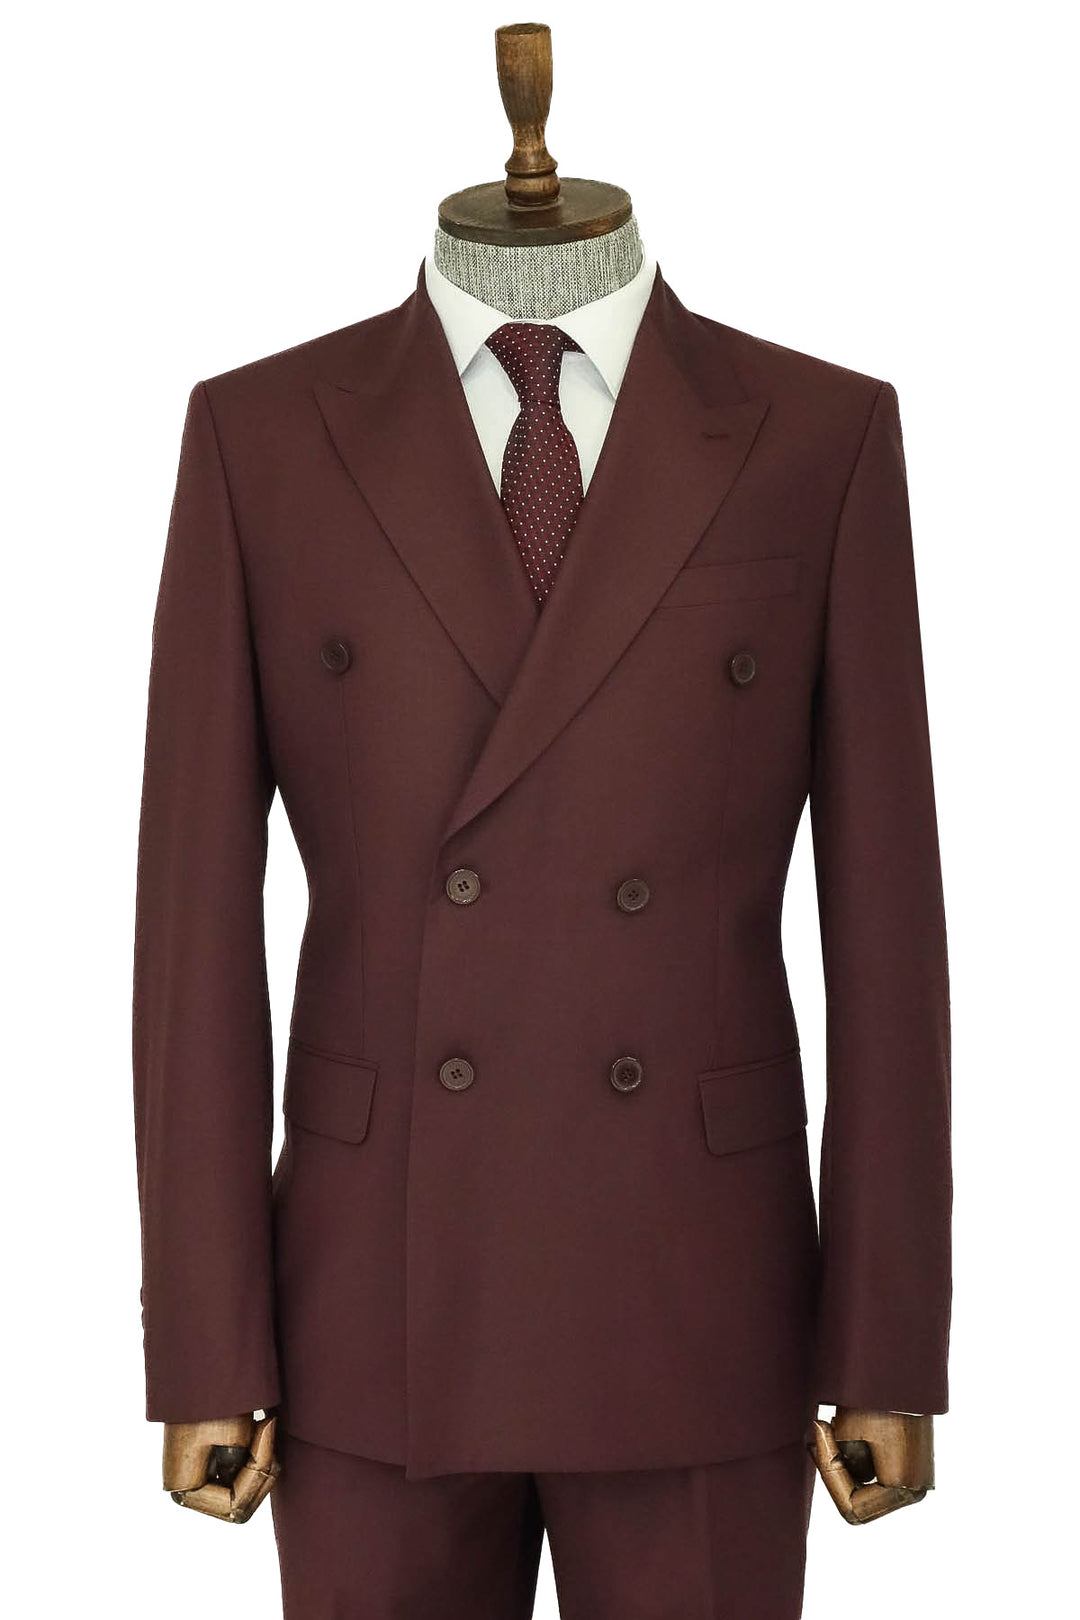 Wide Peak Collar Slim Fit Burgundy Men Double-Breasted Suit - Wessi